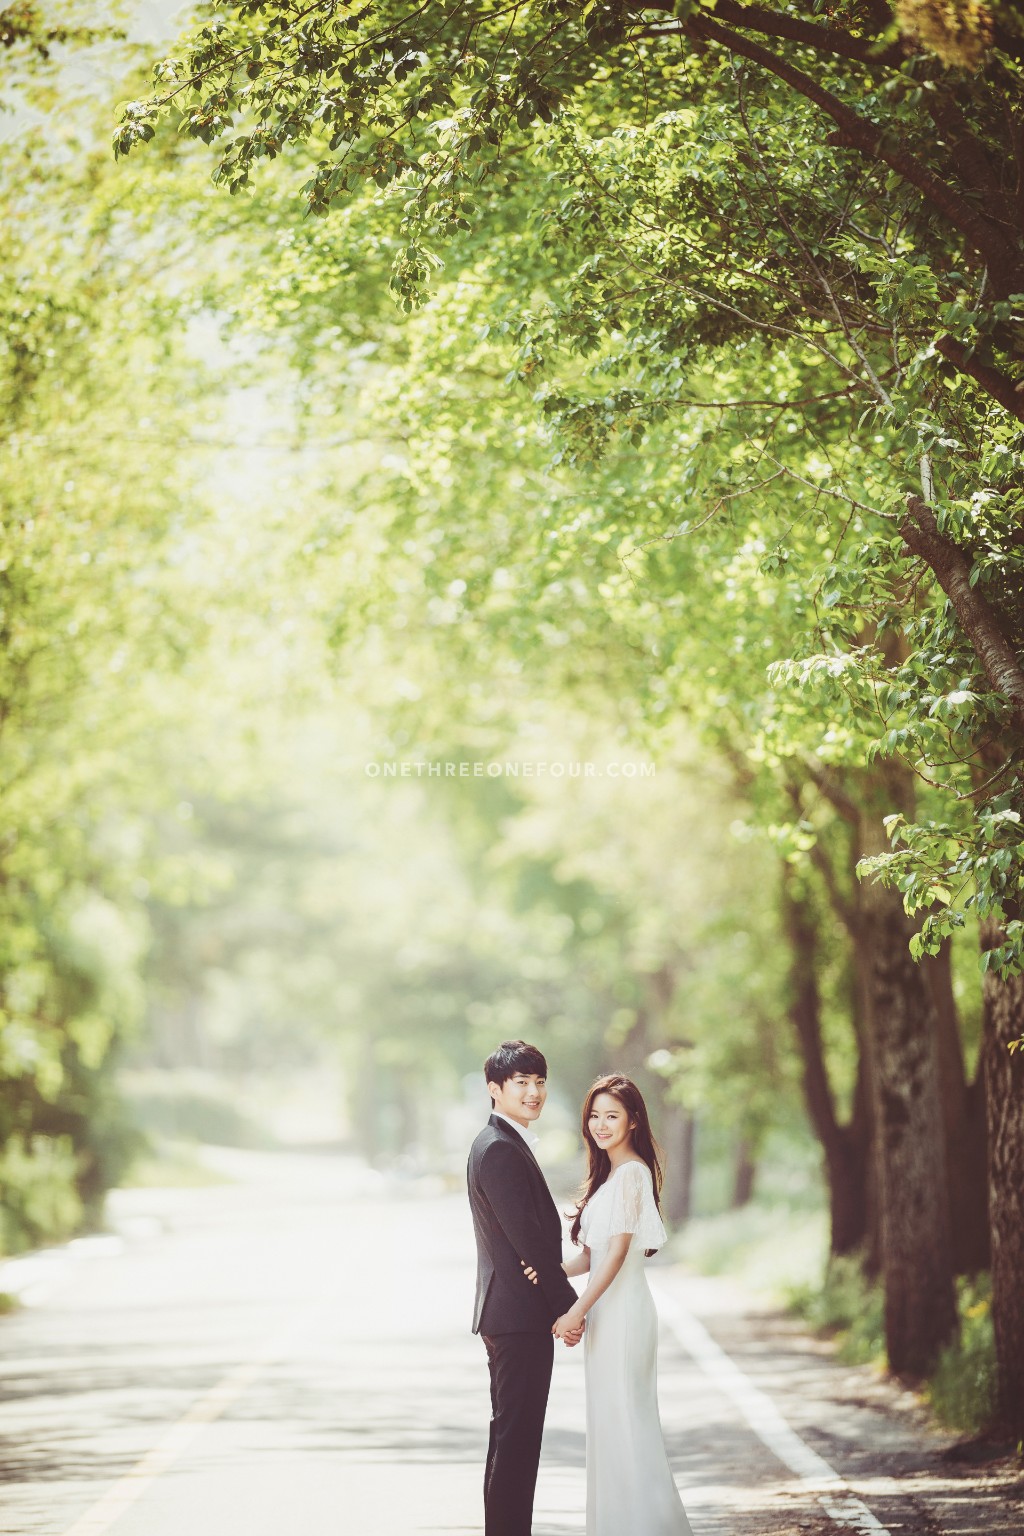 Korean Studio Pre-Wedding Photography: 2017 ePhoto Essay Studio Collection by ePhoto Essay Studio on OneThreeOneFour 18